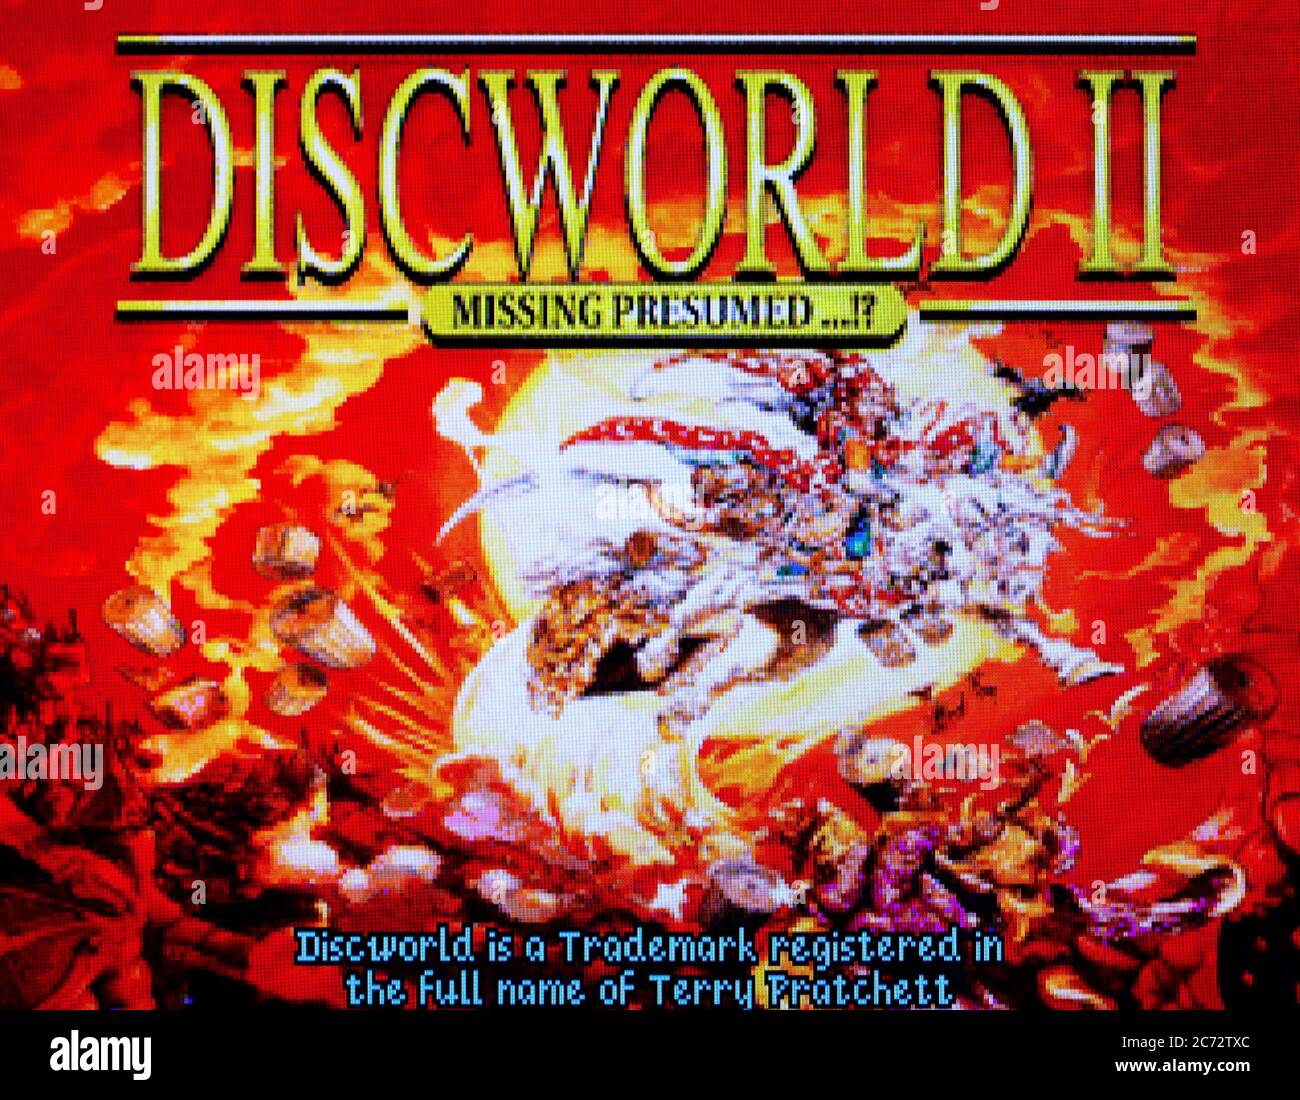 Discworld II 2 - Sega Saturn Videogame - Editorial use only Stock Photo